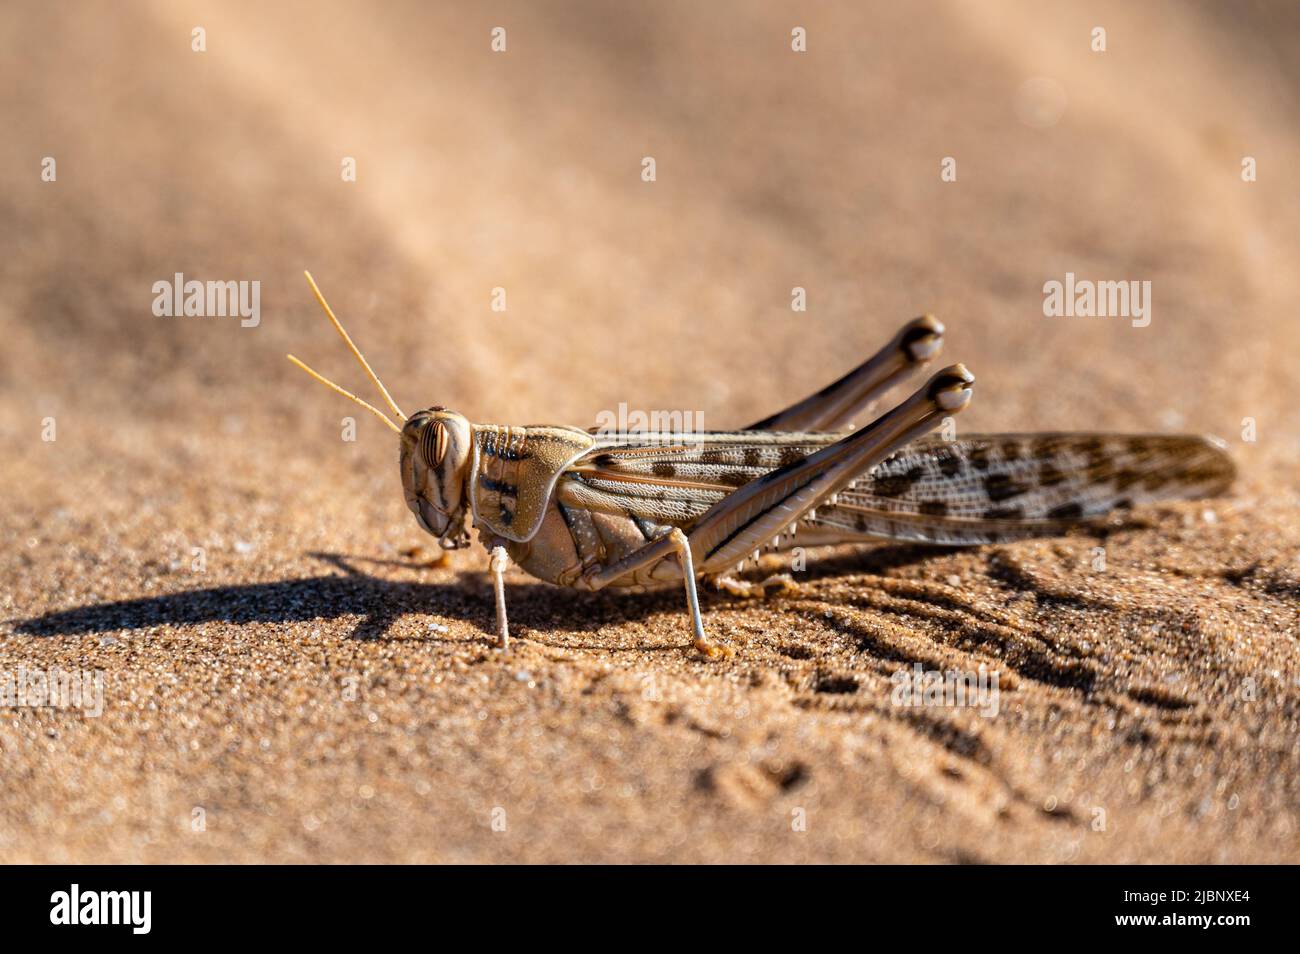 side profile of a grasshopper in desert sand Stock Photo